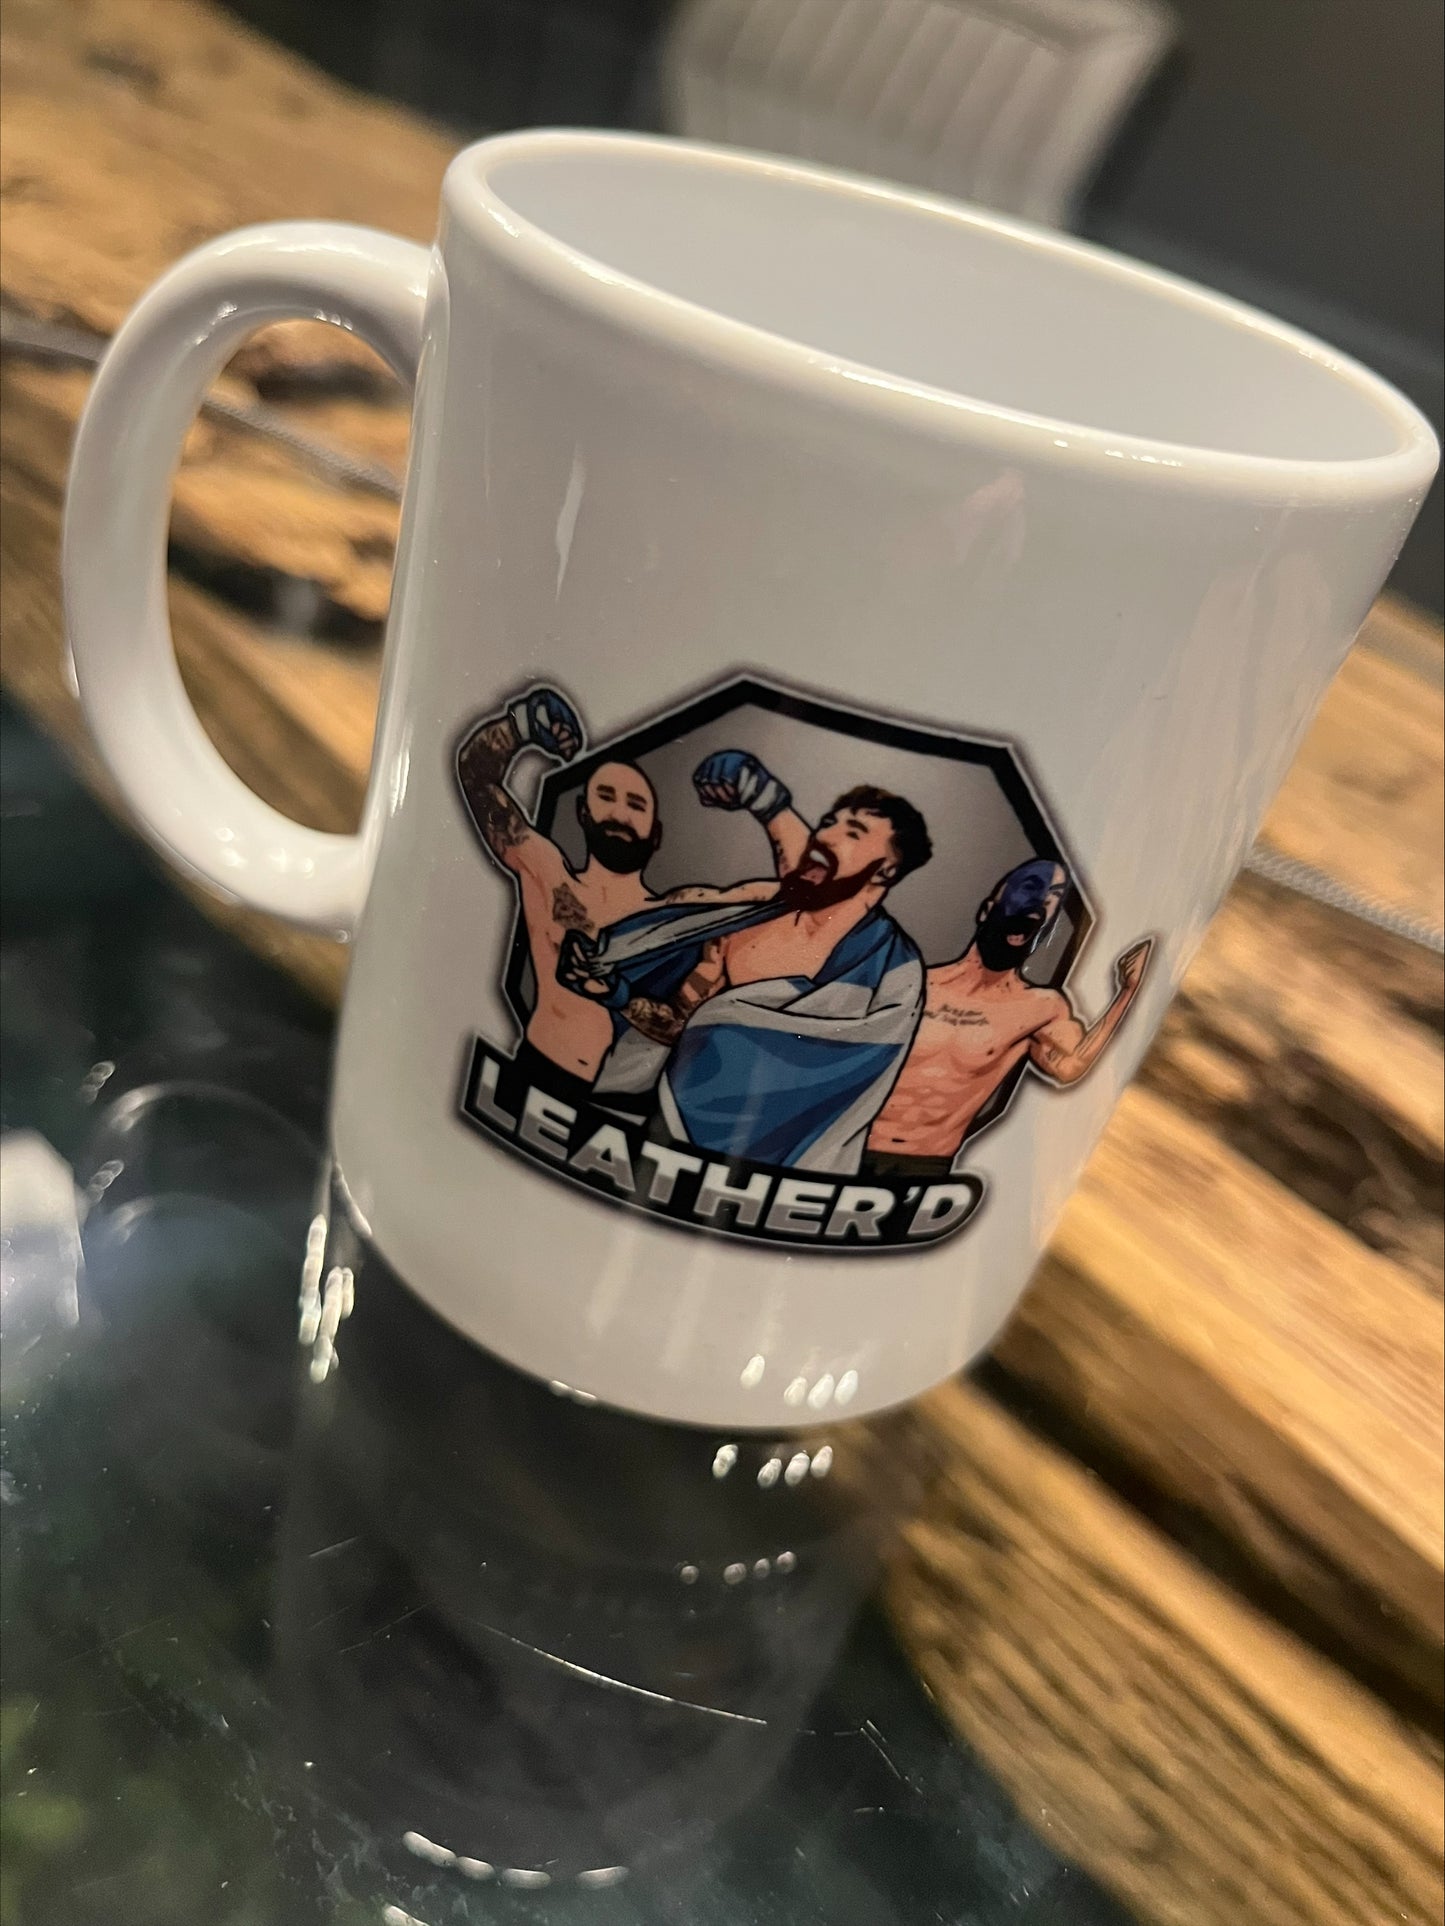 Leather'd Podcast Mug